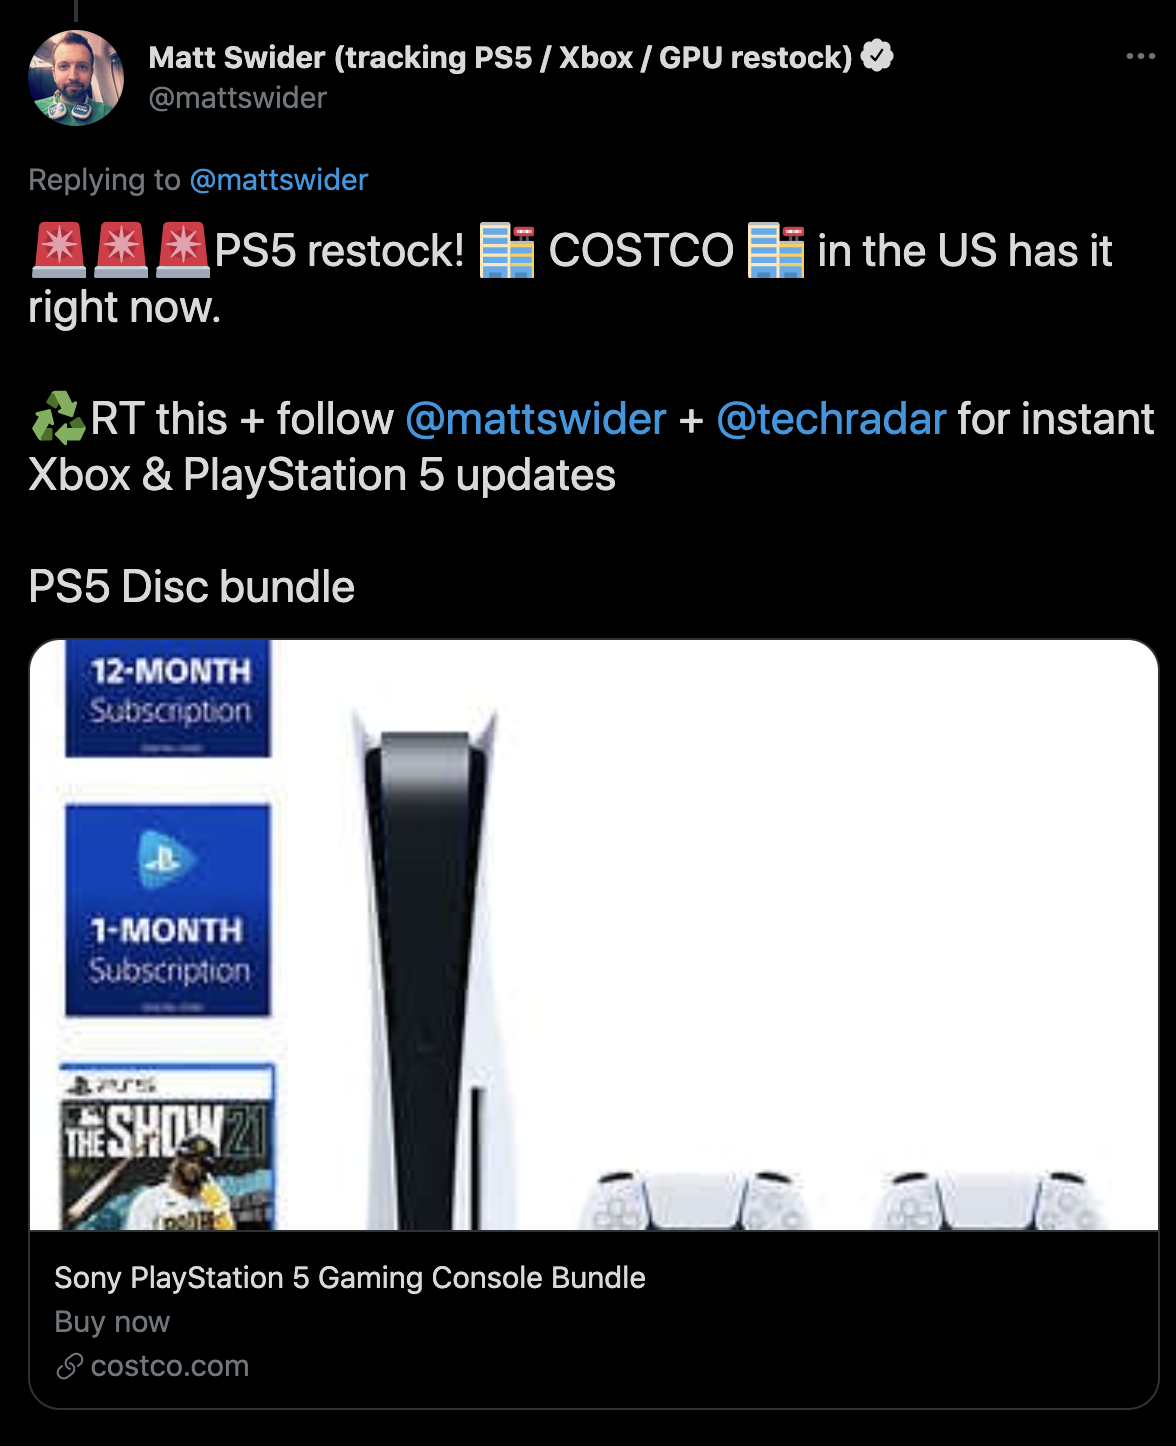 PS5 restock at Costco Twitter alert